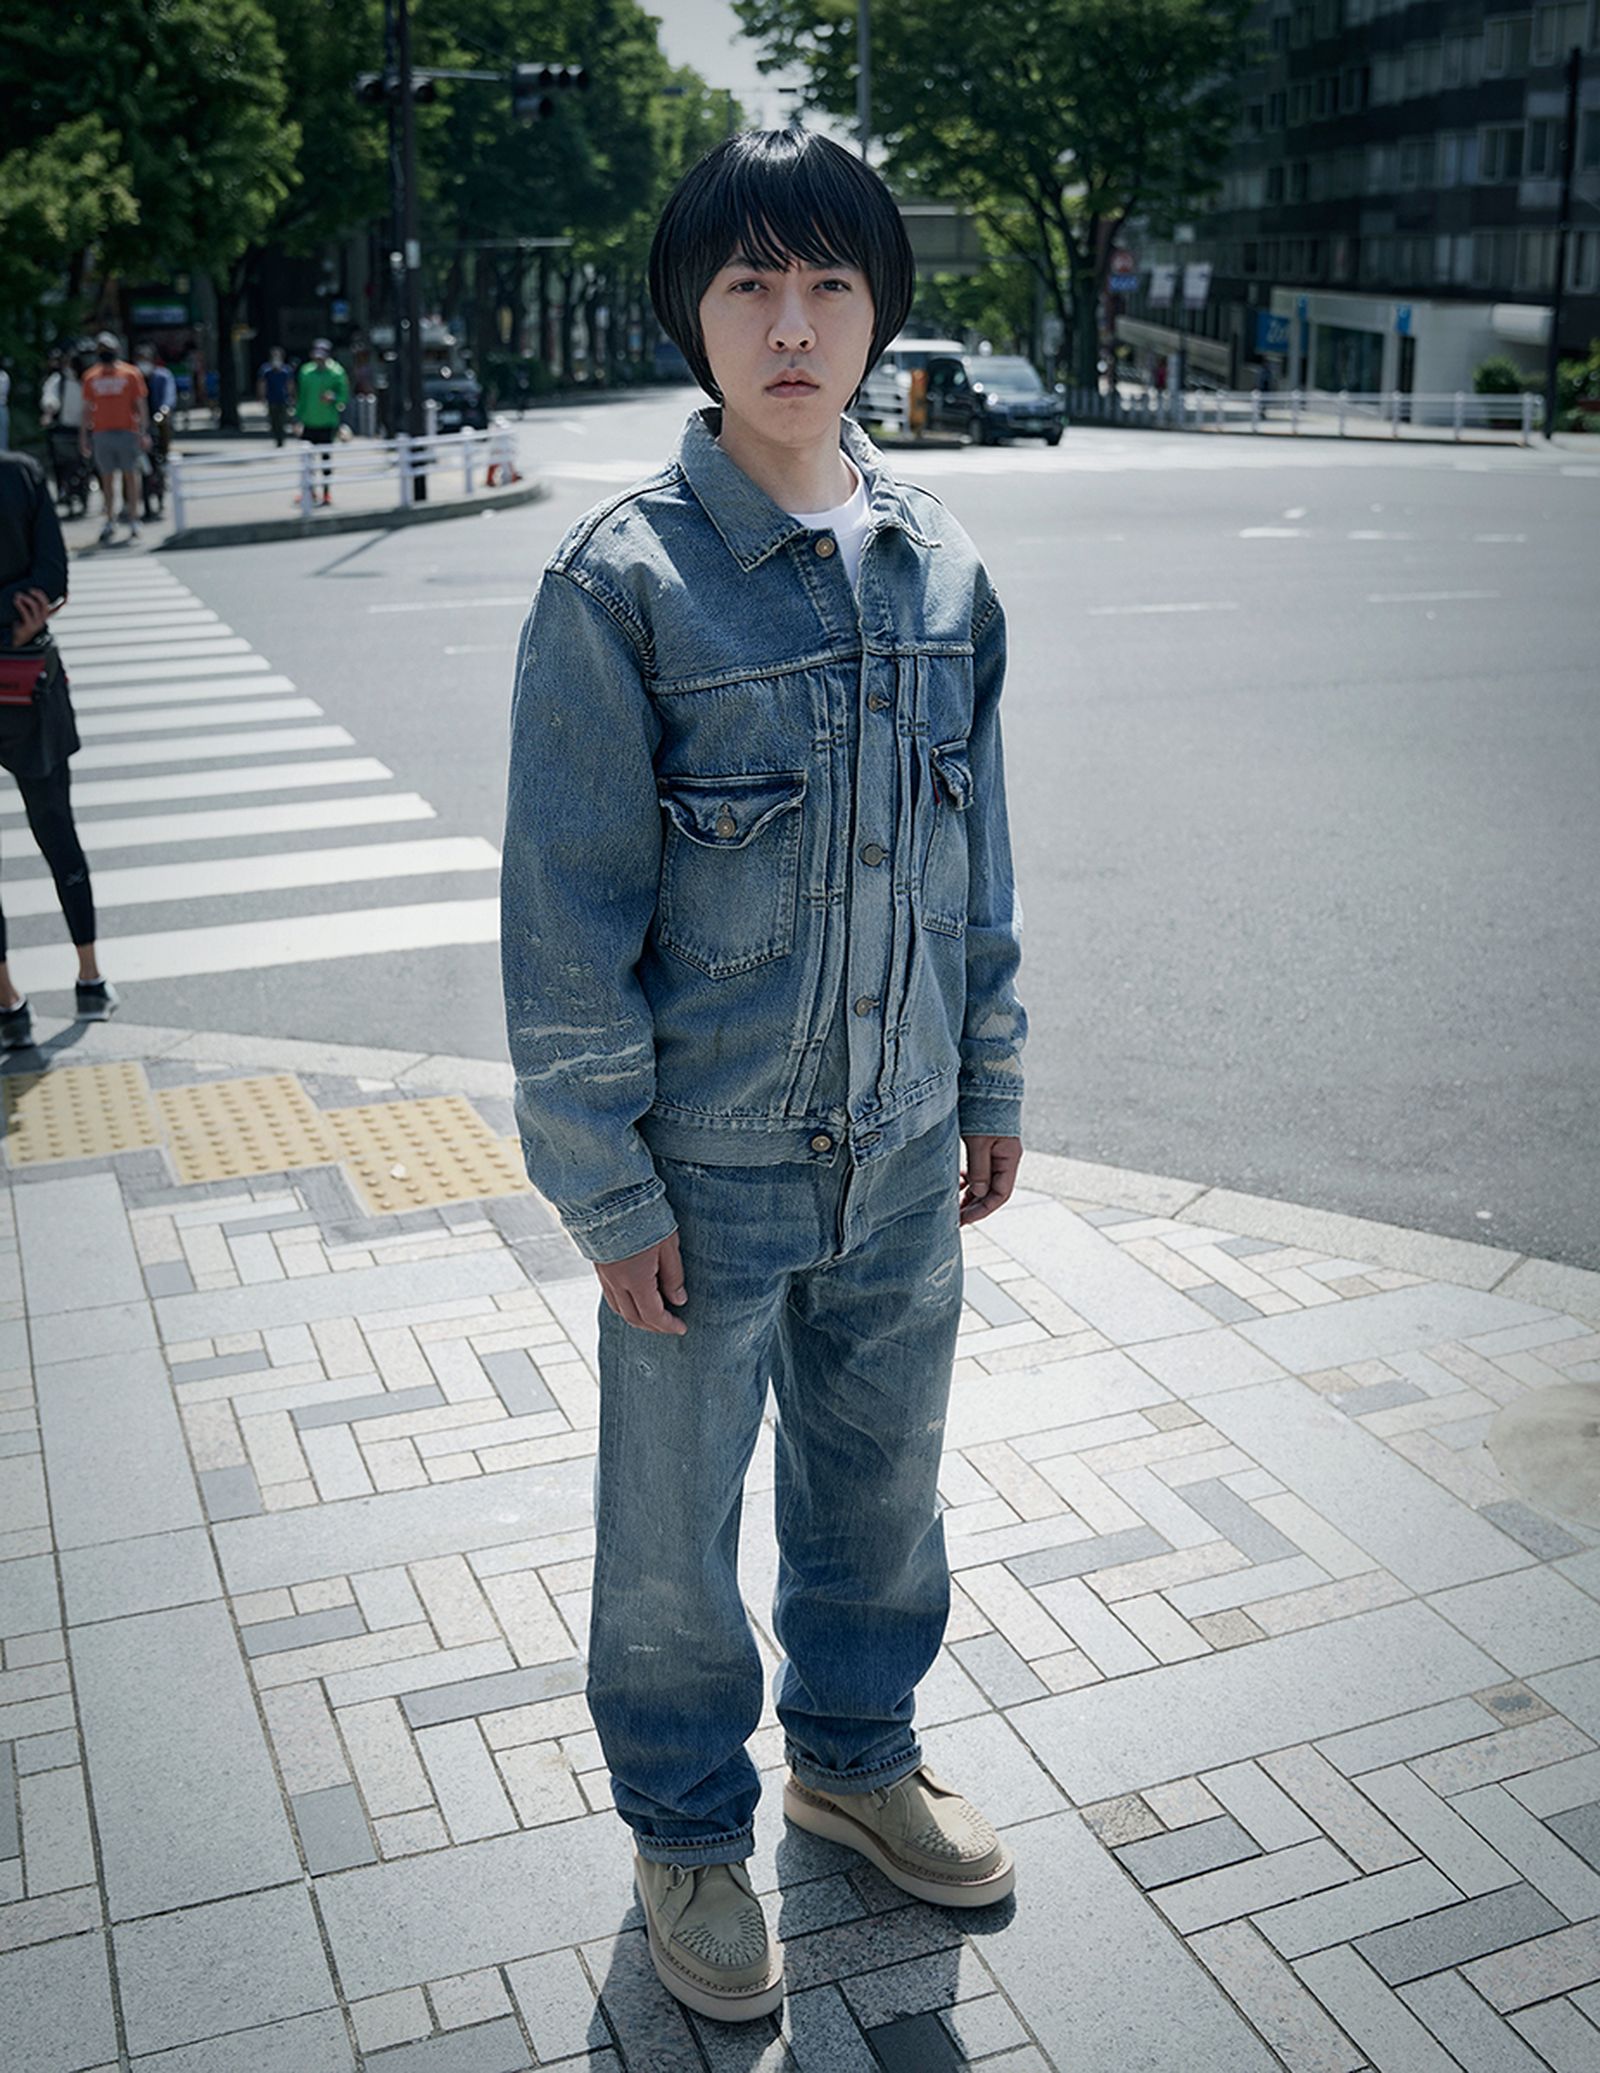 NIGO x Levi's Japan Collab Trucker Jacket, 501 Jeans